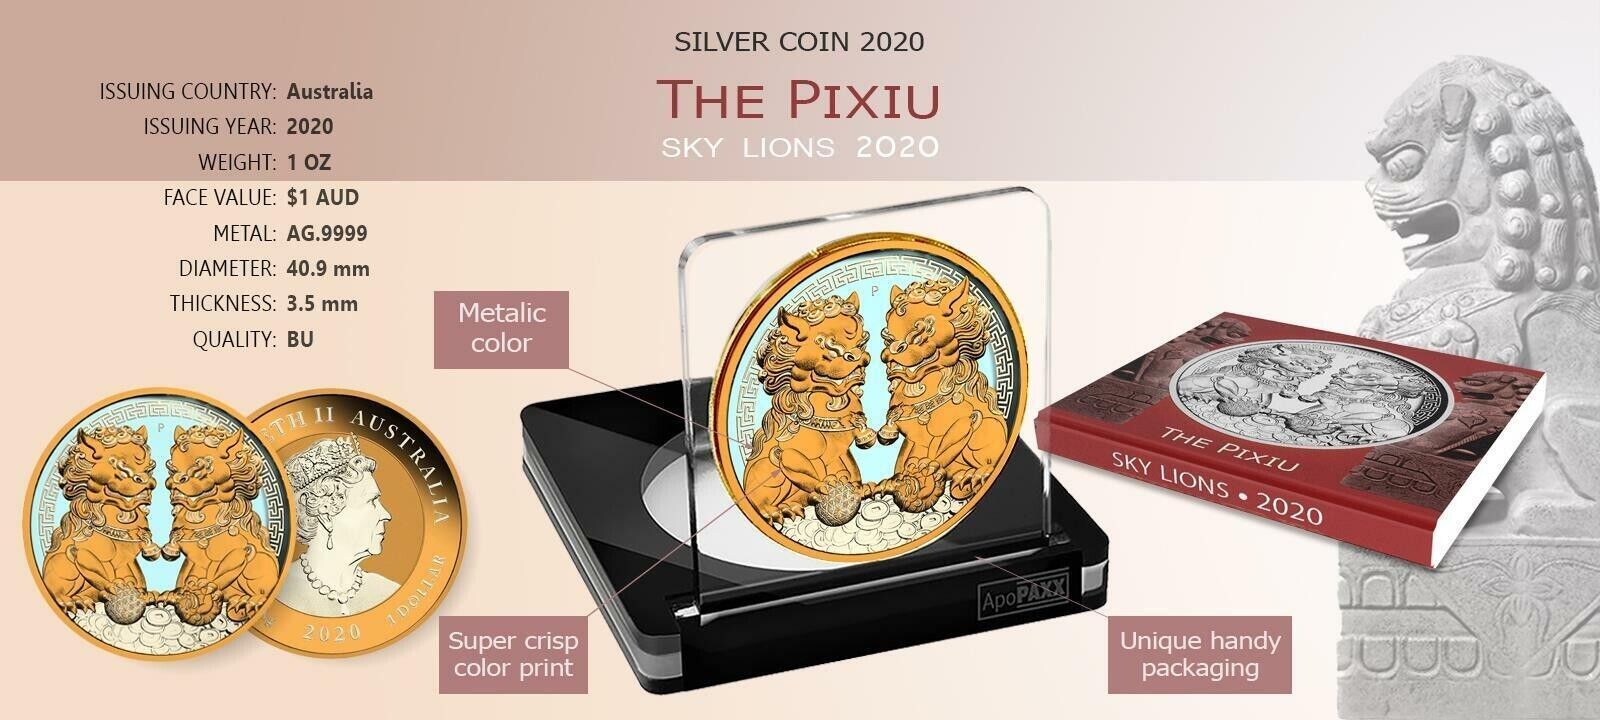 1 Oz Silver Coin 2020 $1 Australia Guardian Sky Lions Pixiu - Turquoise & Yellow-classypw.com-4